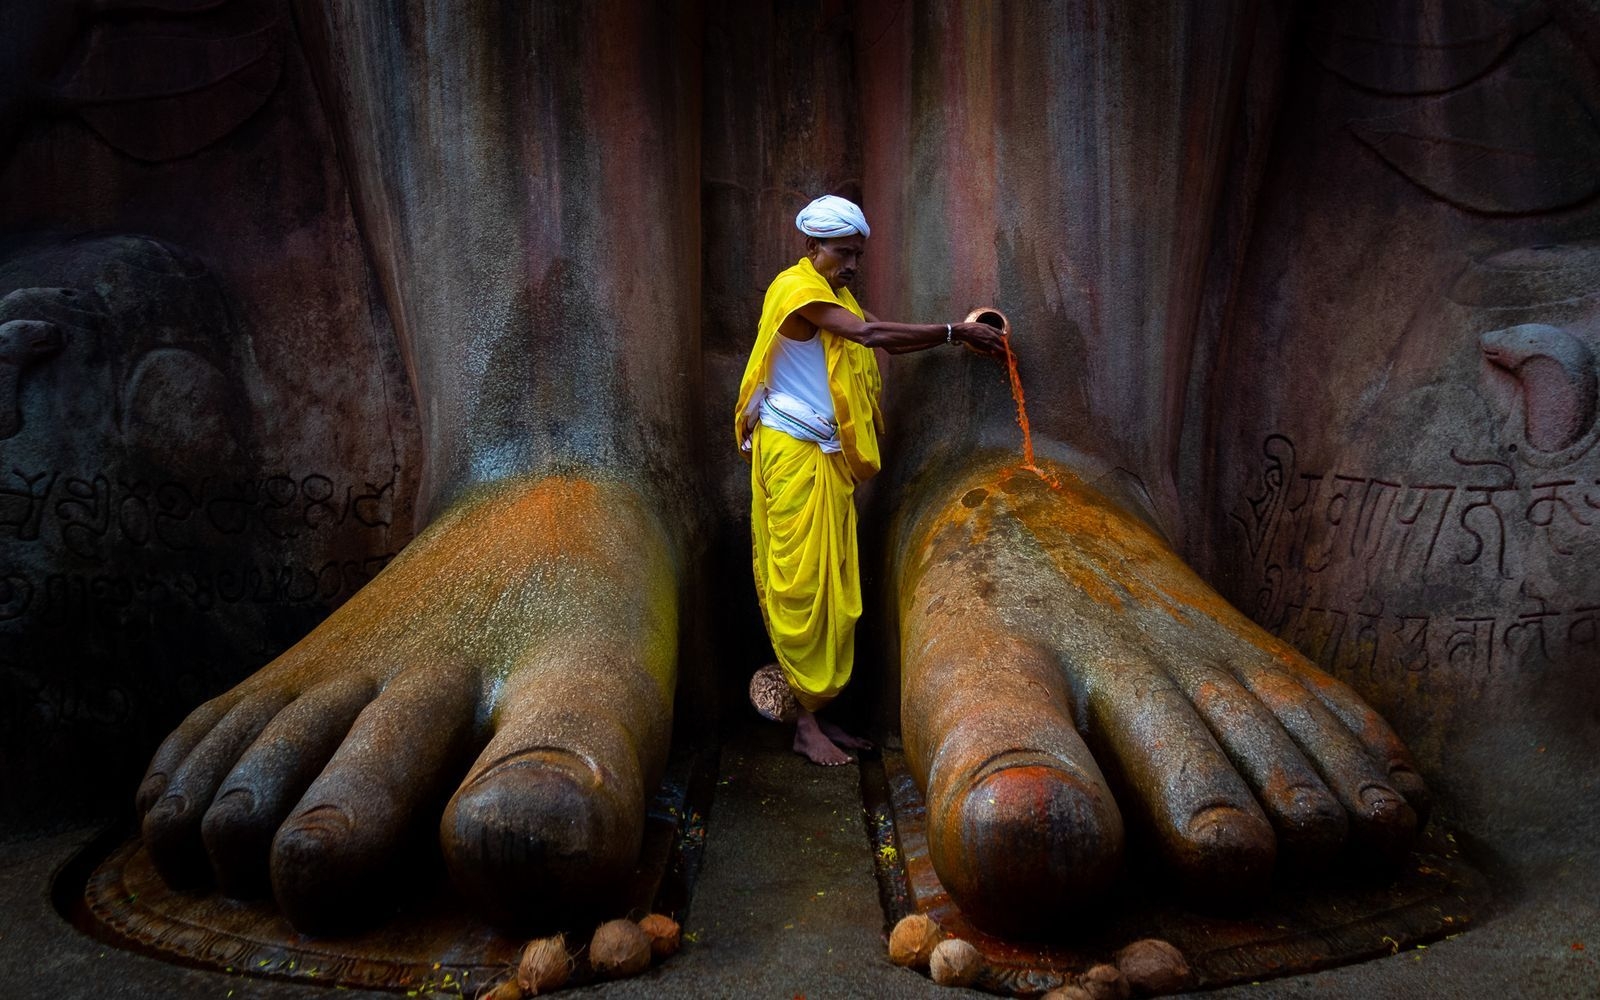 Photograph by Vinod Kulkarni, National Geographic Your Shot